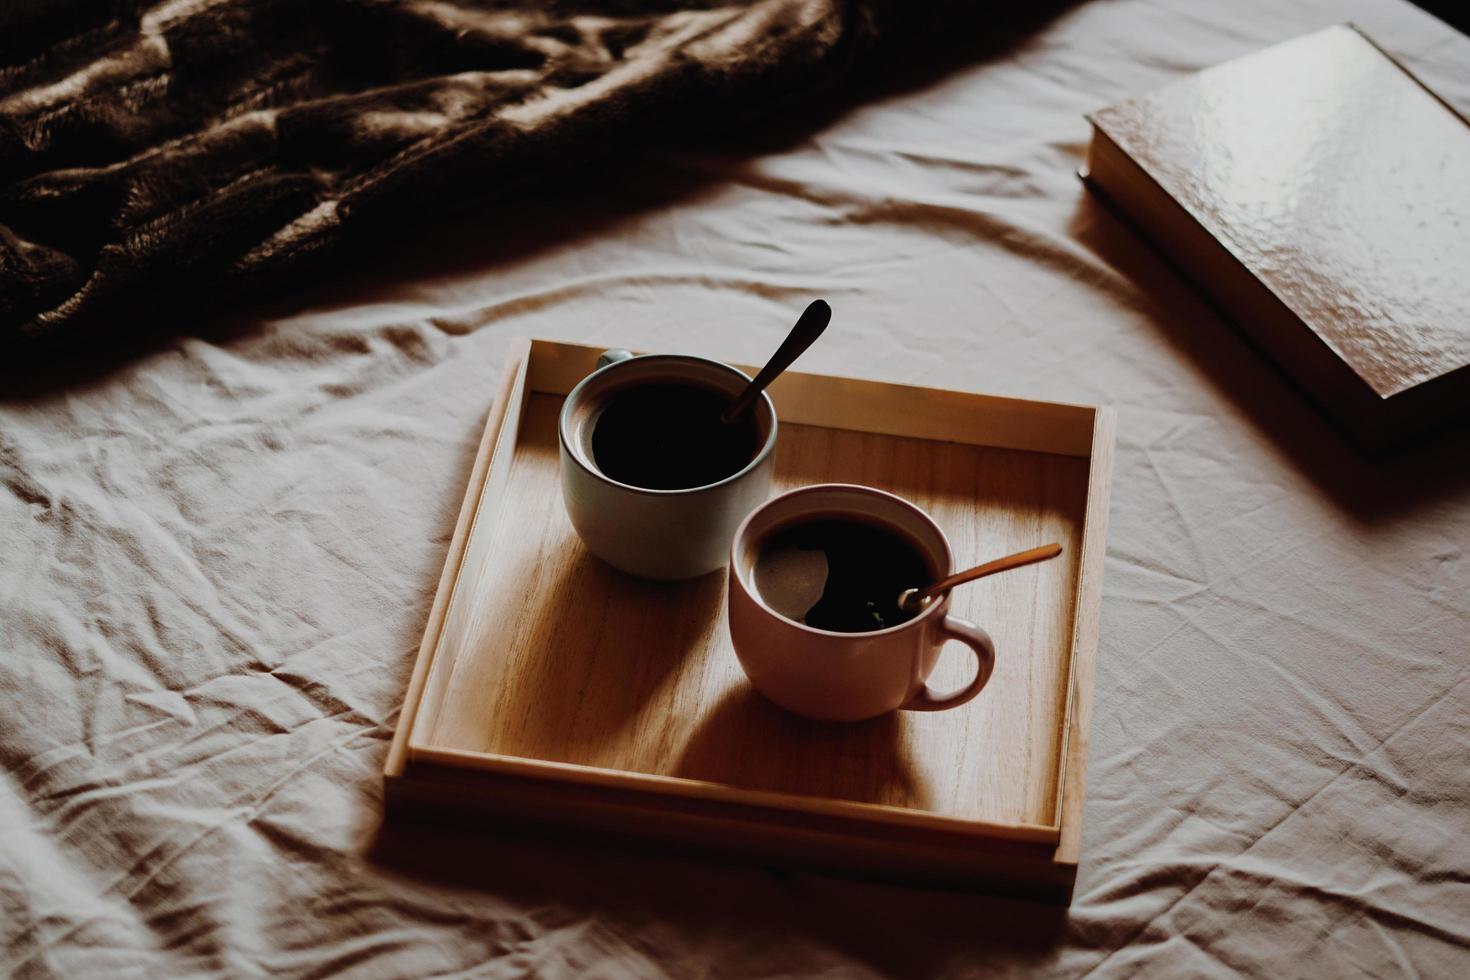 kopjes koffie op houten dienblad op bed foto